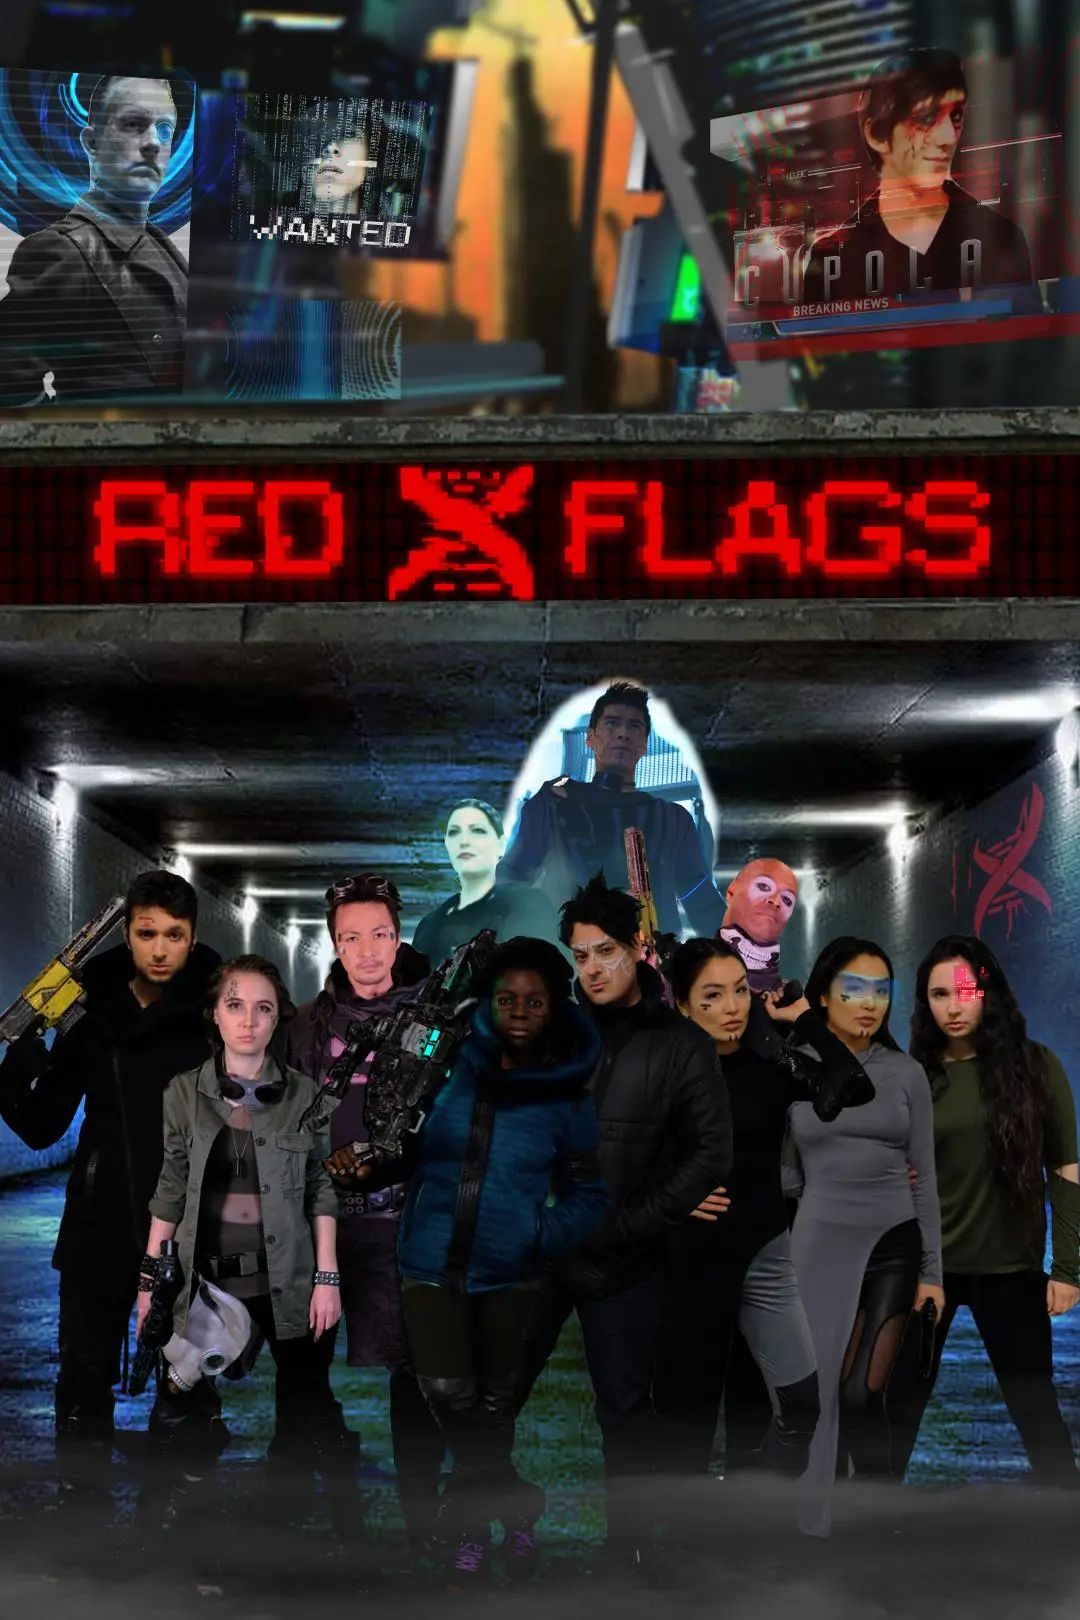 Red X Flags_peliplat